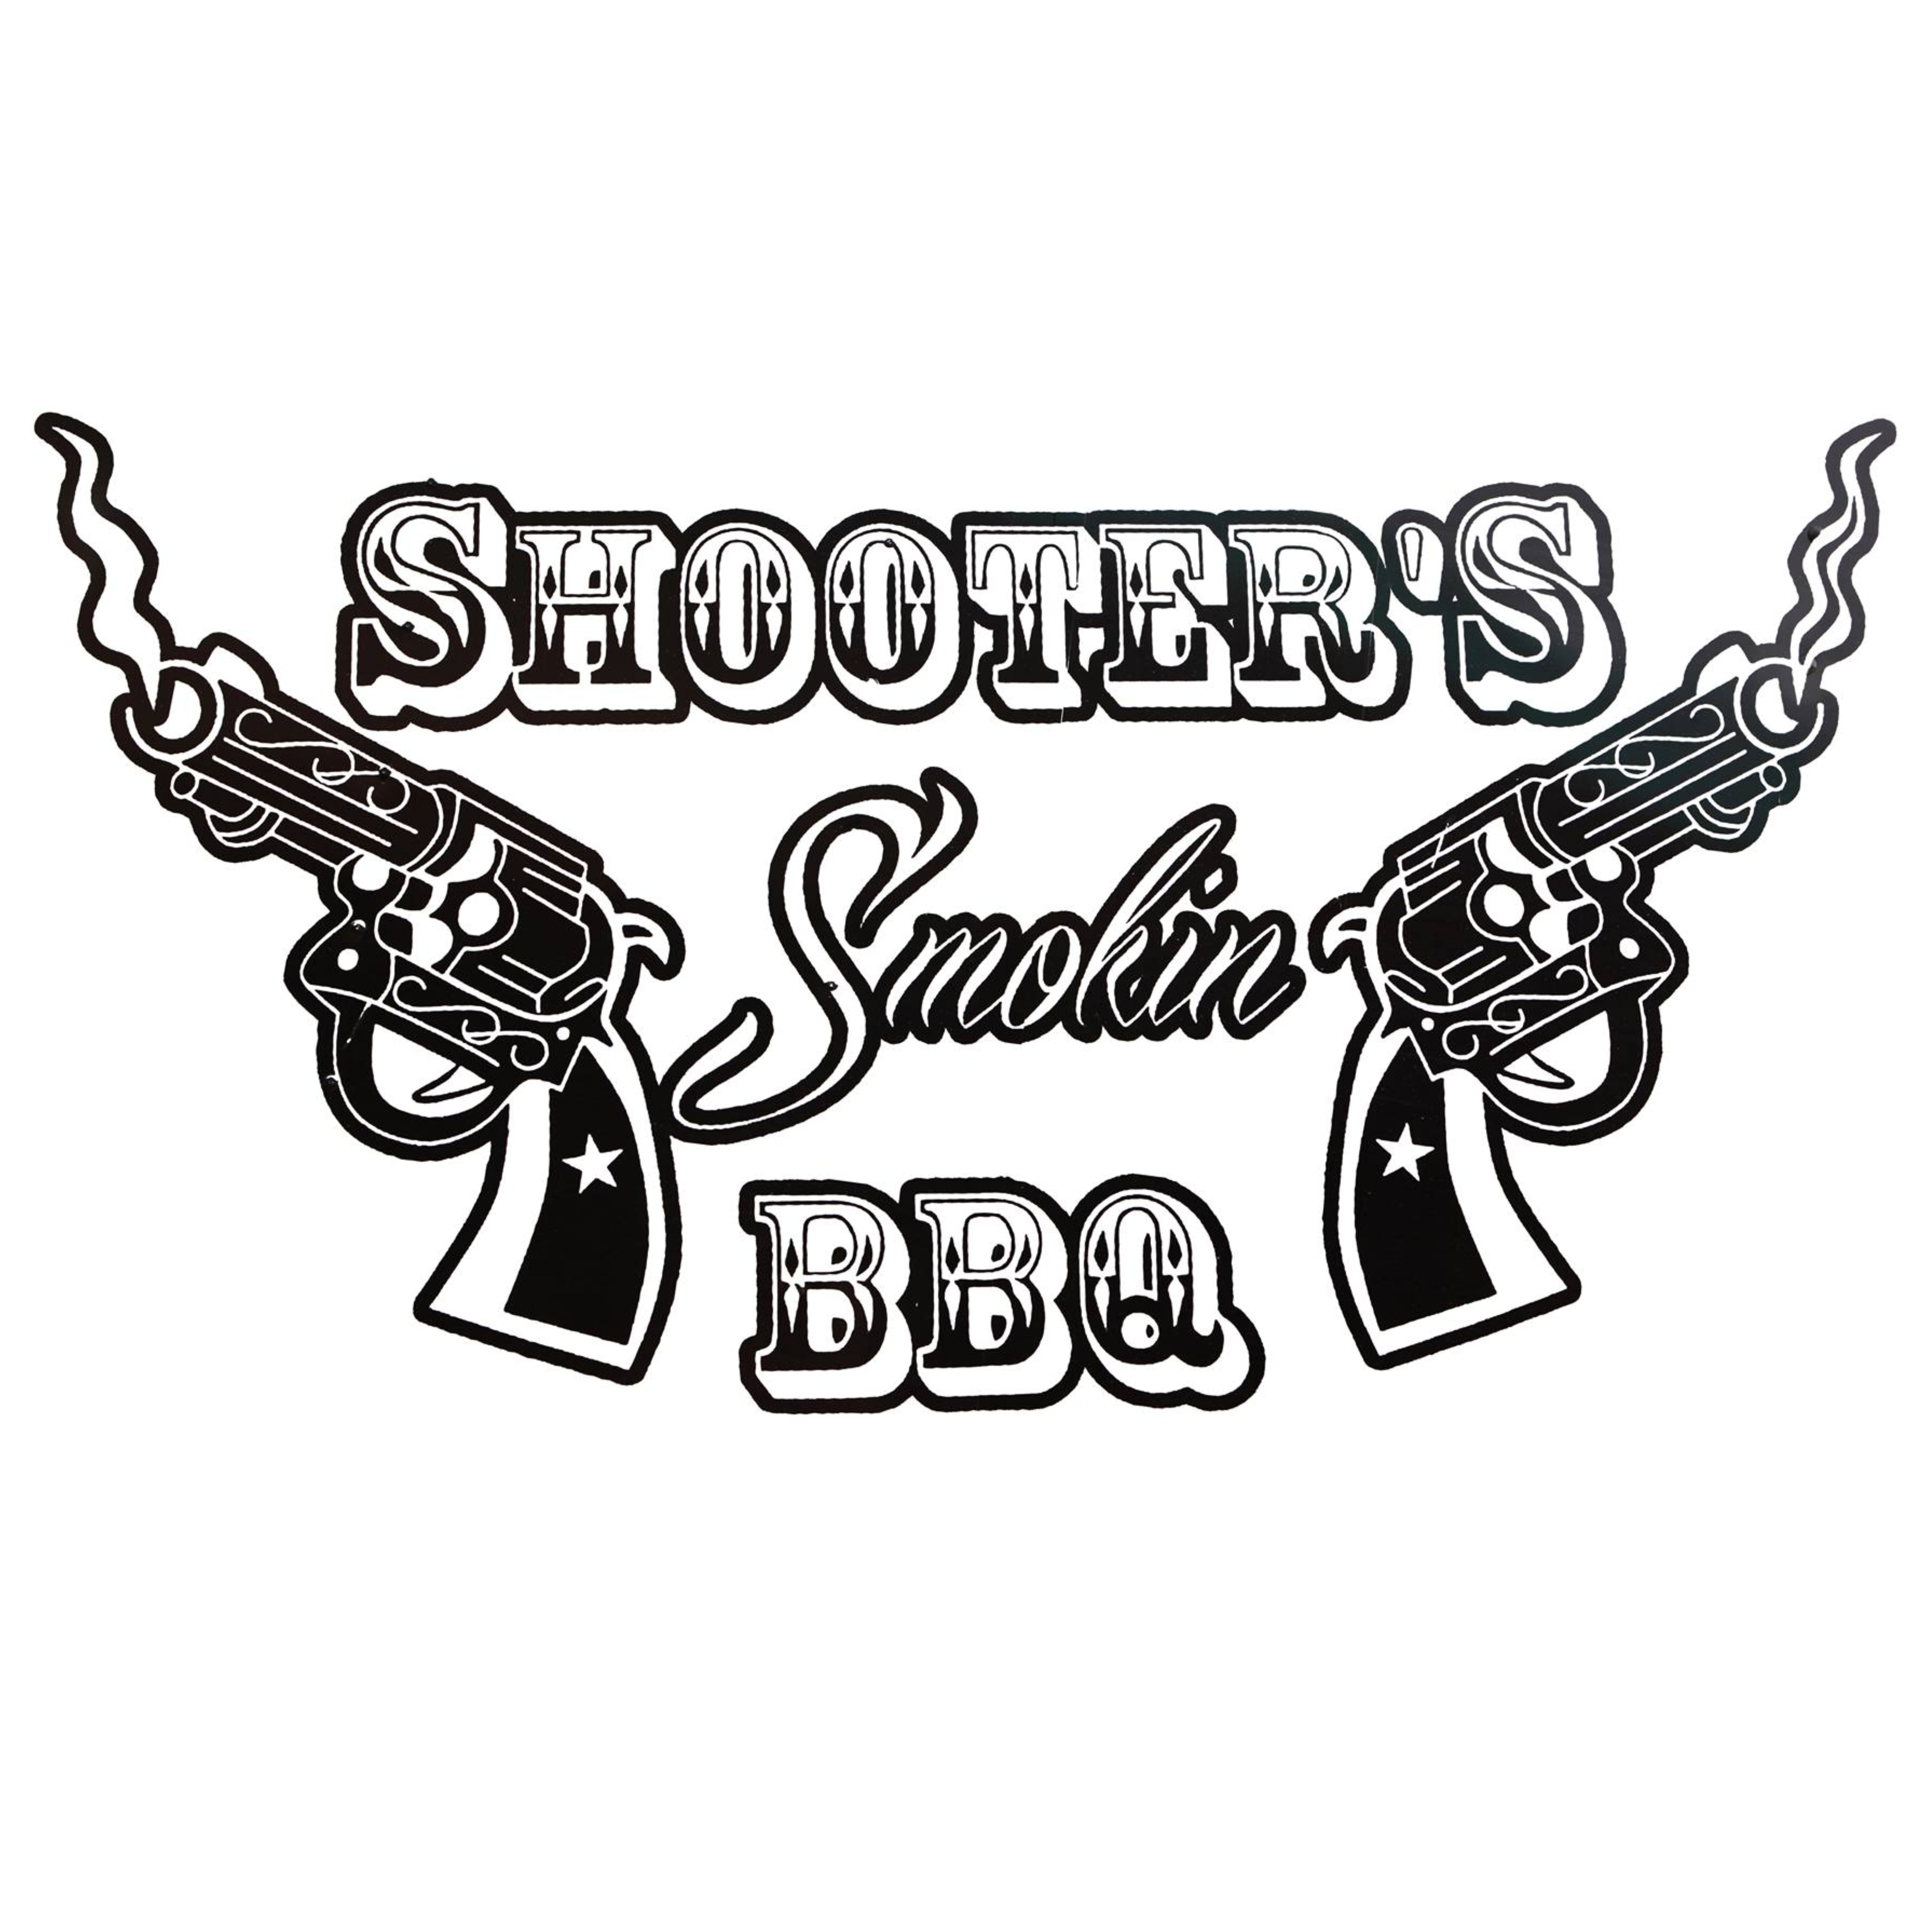 SHOOTERS BBQ ~ SAN ELIZARIO, TEXAS